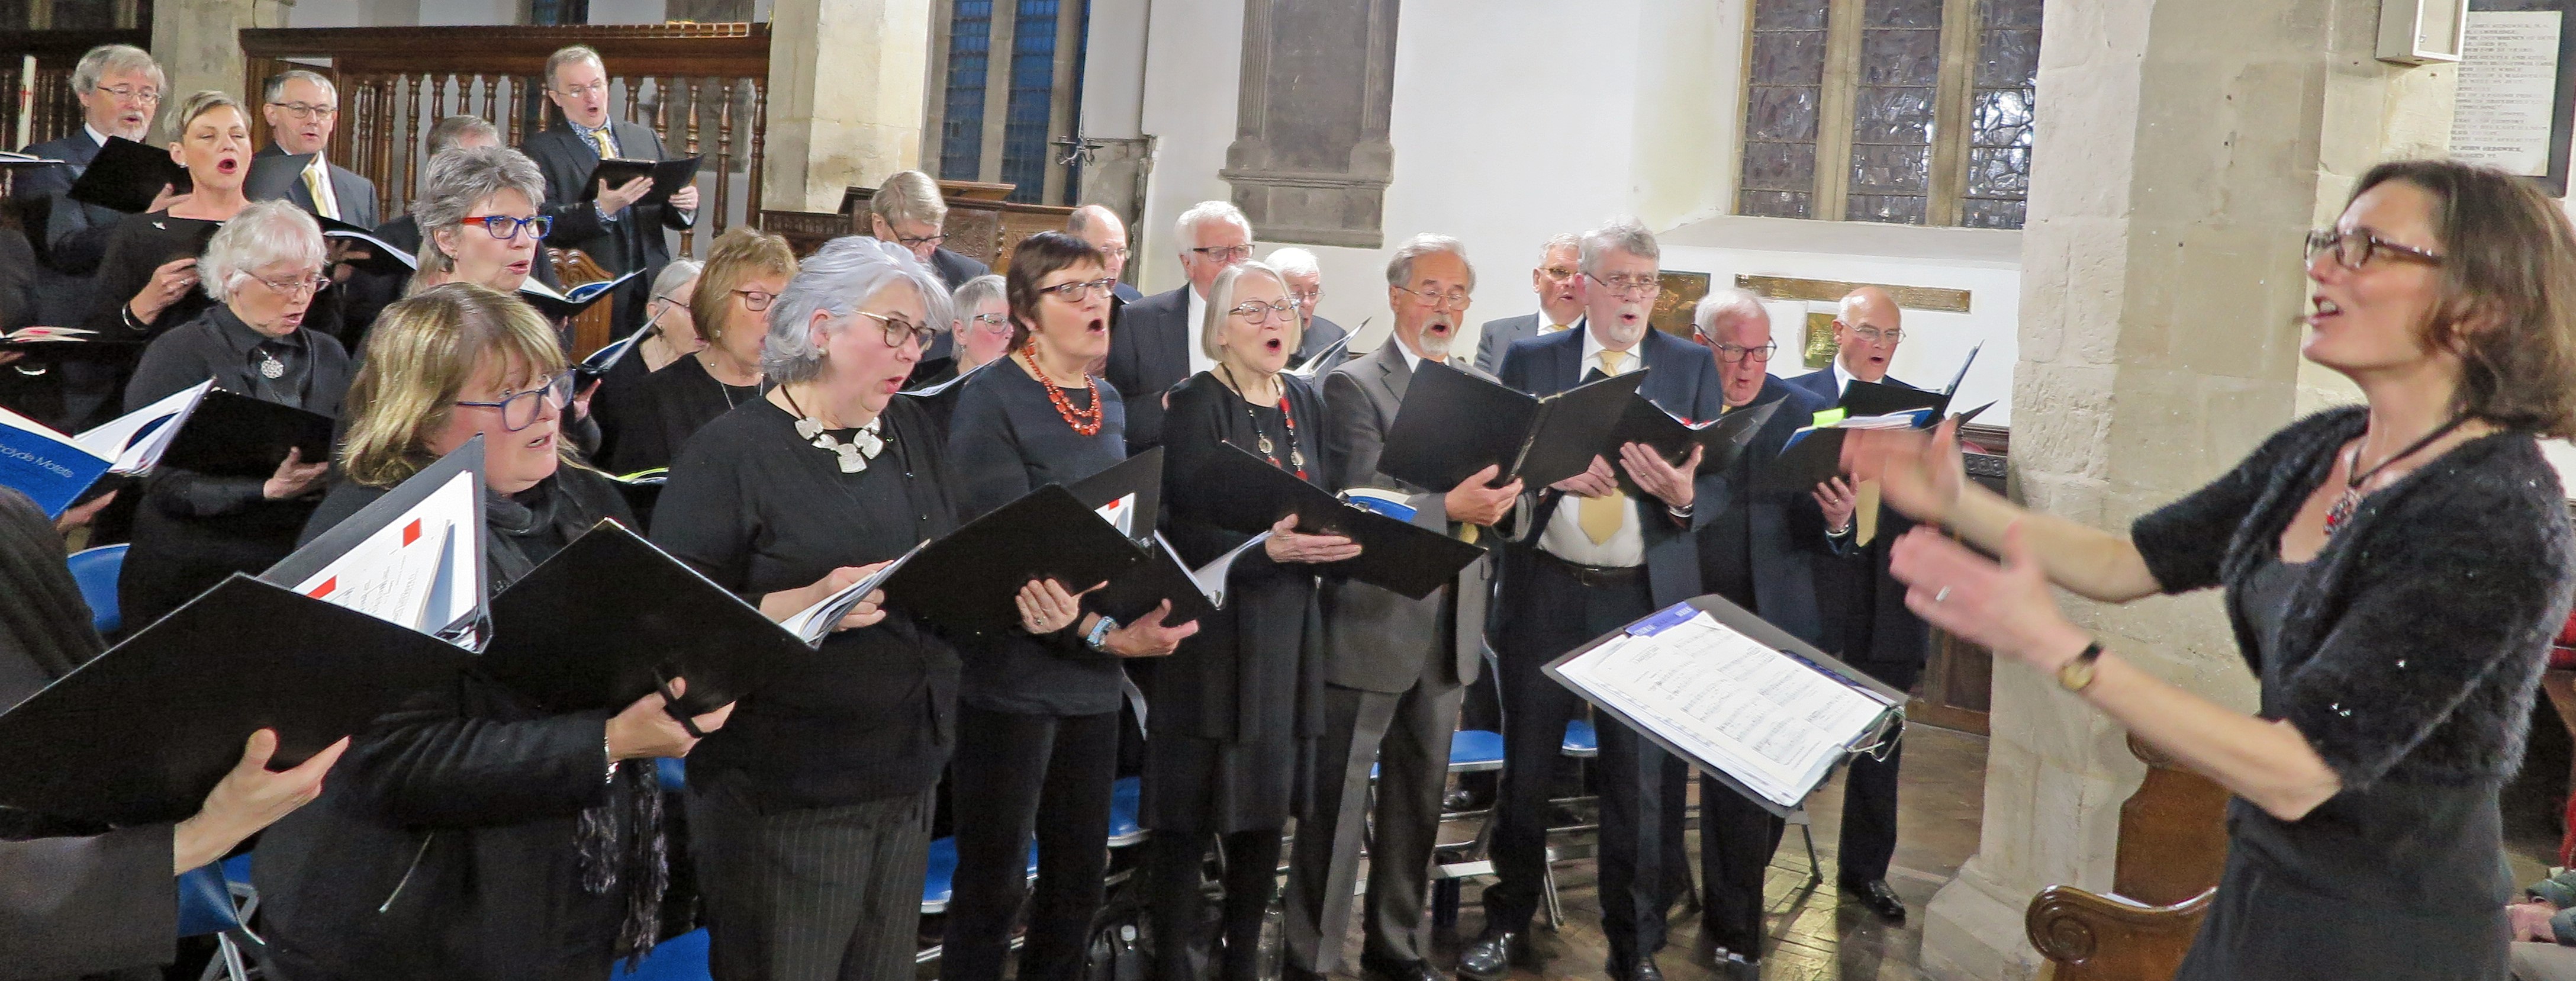 The Dentdale Choir